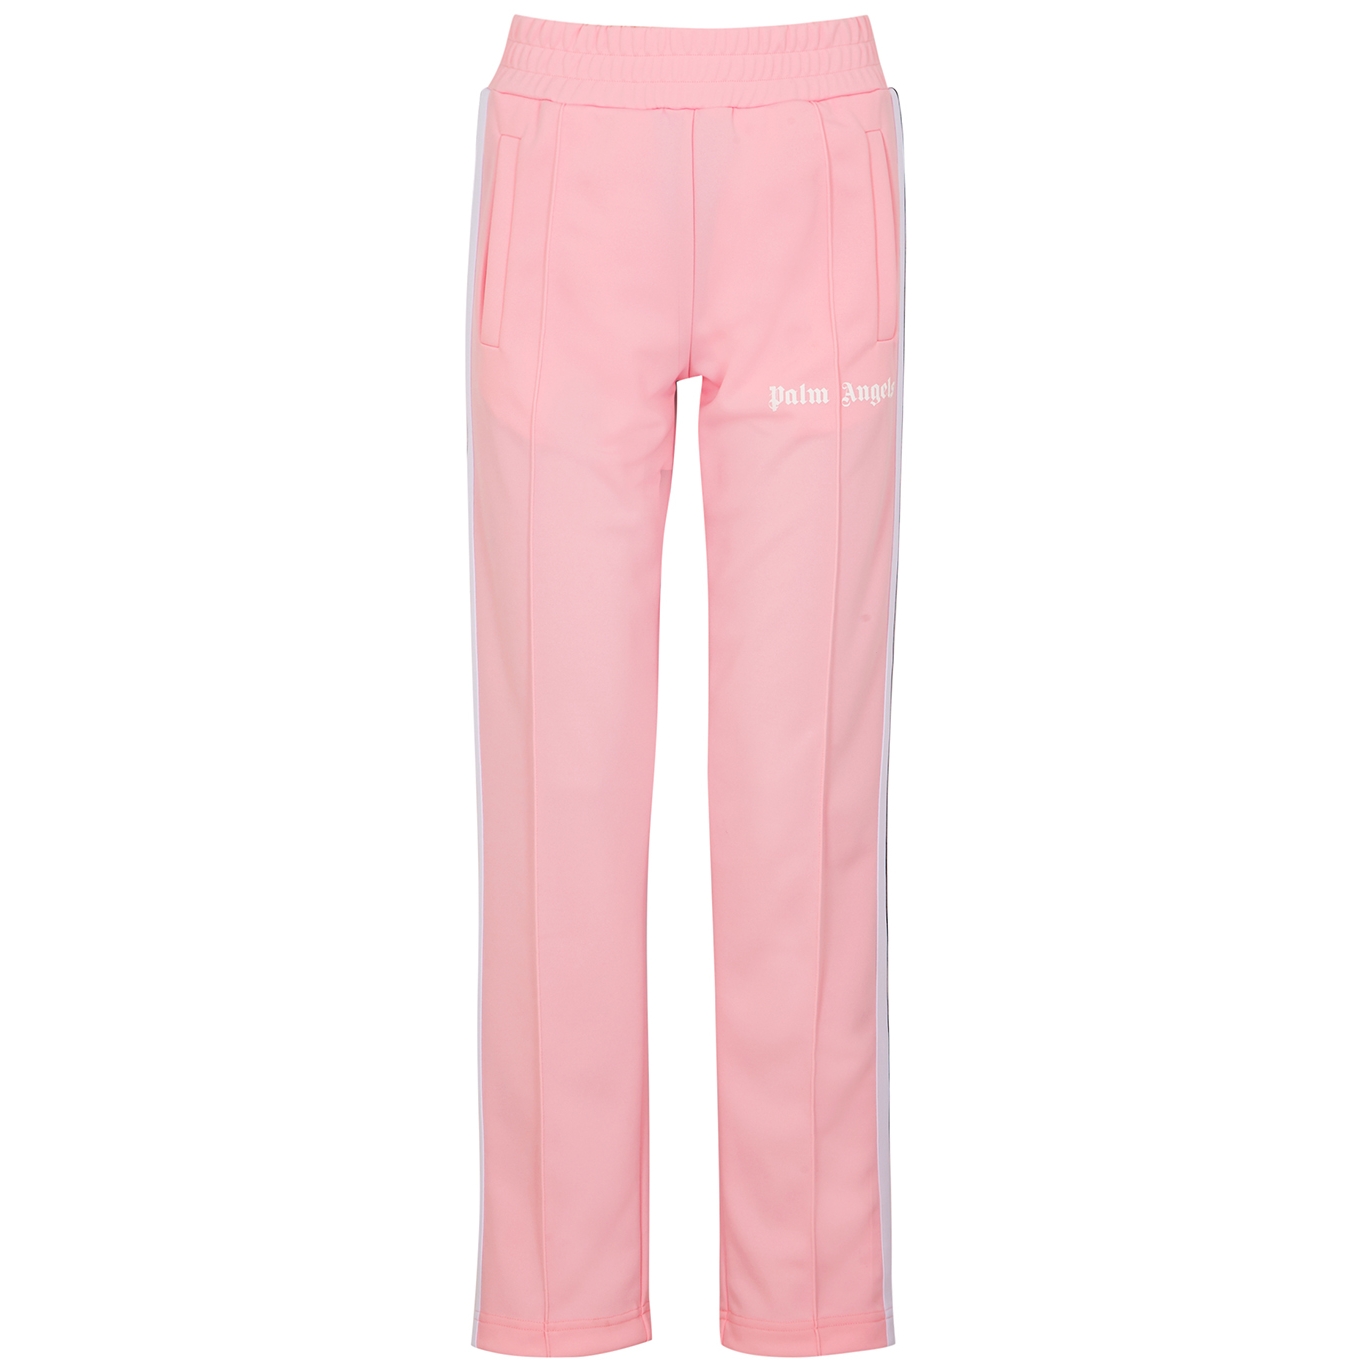 Palm Angels Pink Striped Jersey Track Pants - Light Pink - L